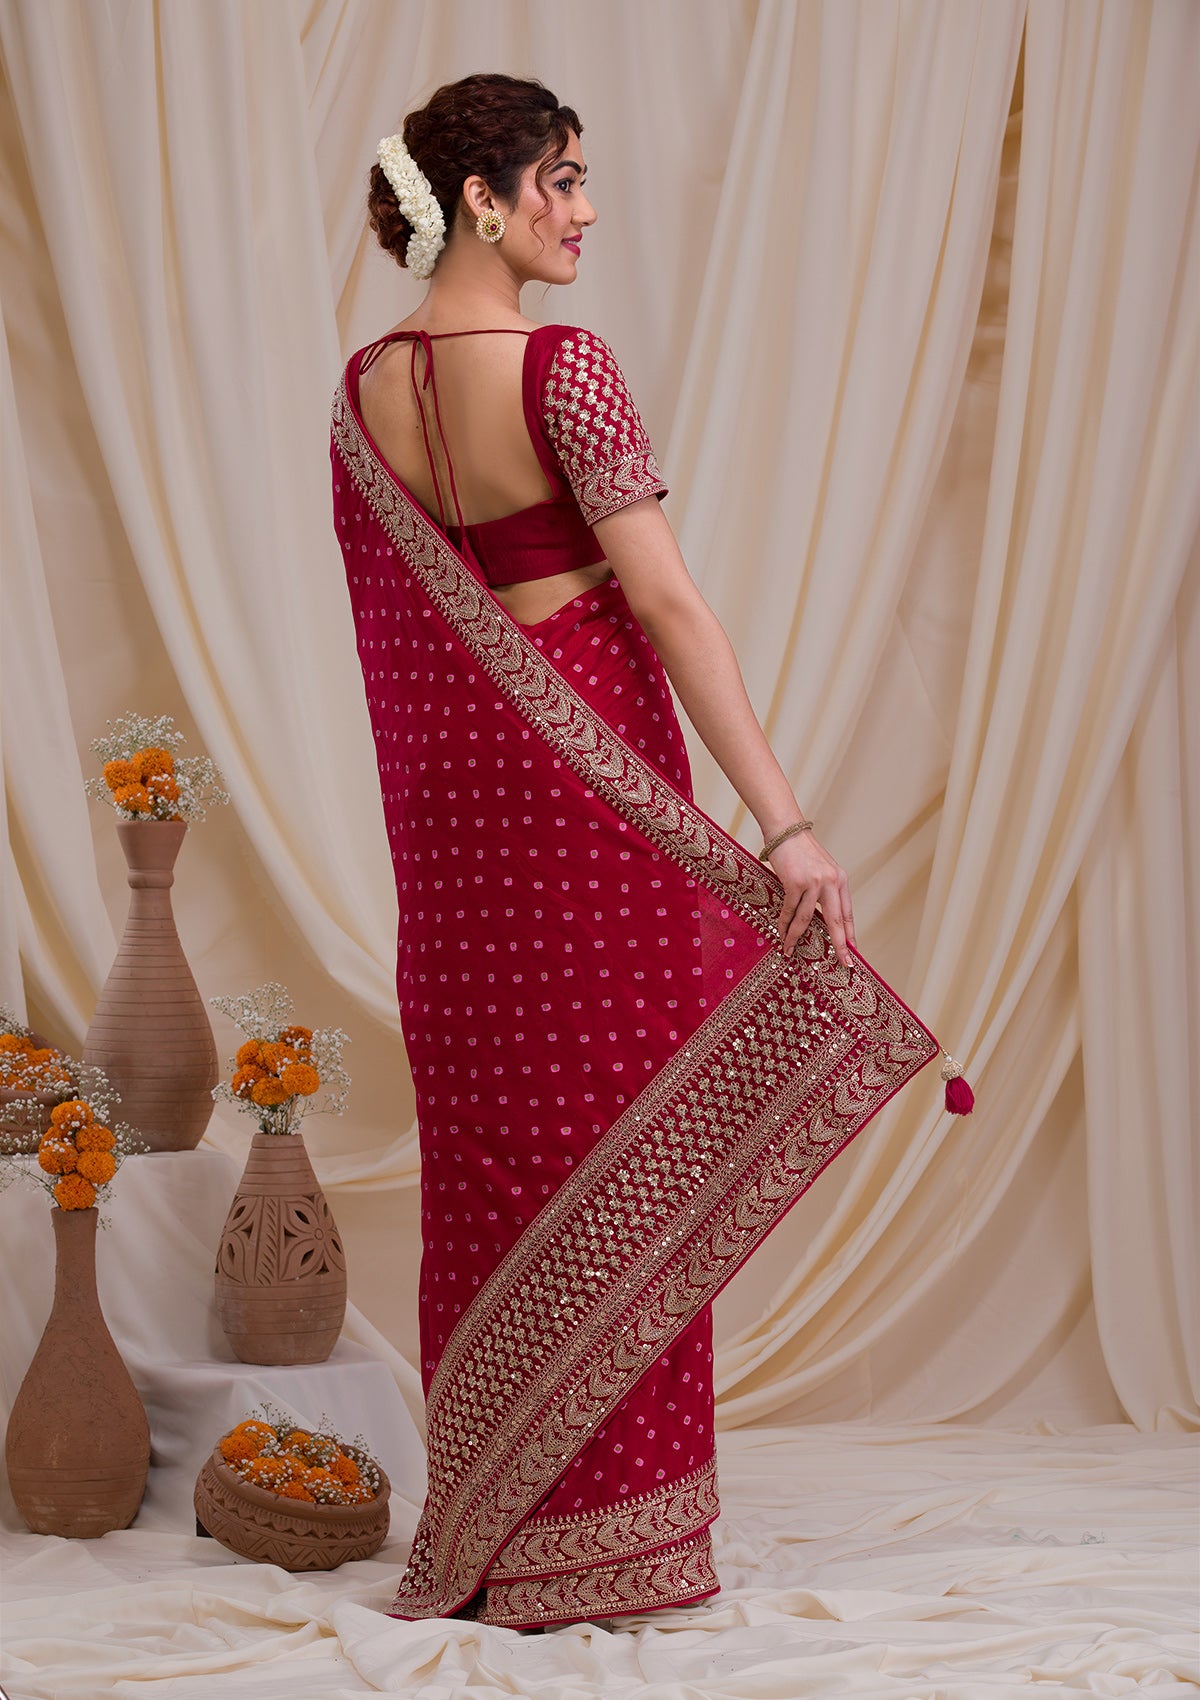 Rani Pink Colour Wedding Saree in Satin,Georgette Fabric.